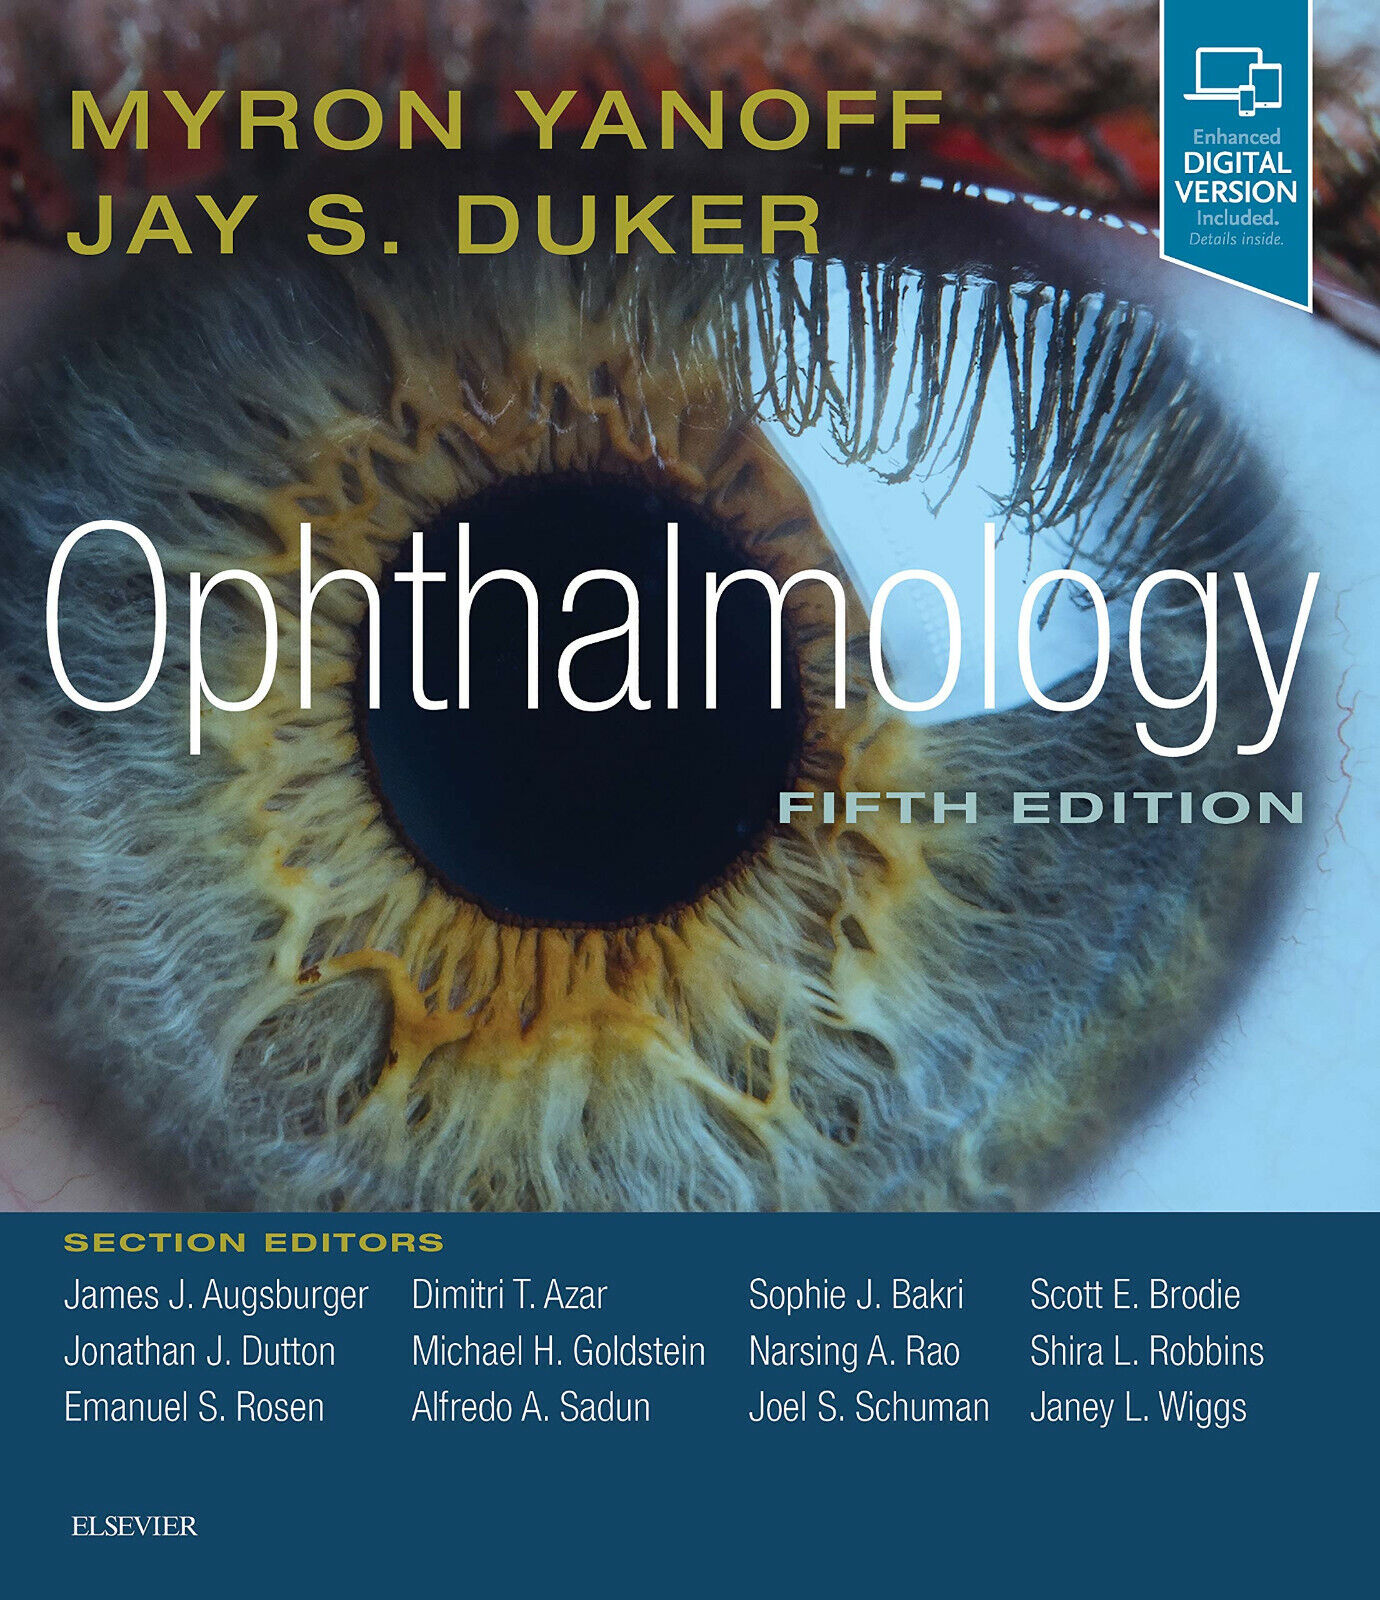 Ophthalmology - Myron Yanoff, Jay S. Duker - Elsevier, 2018